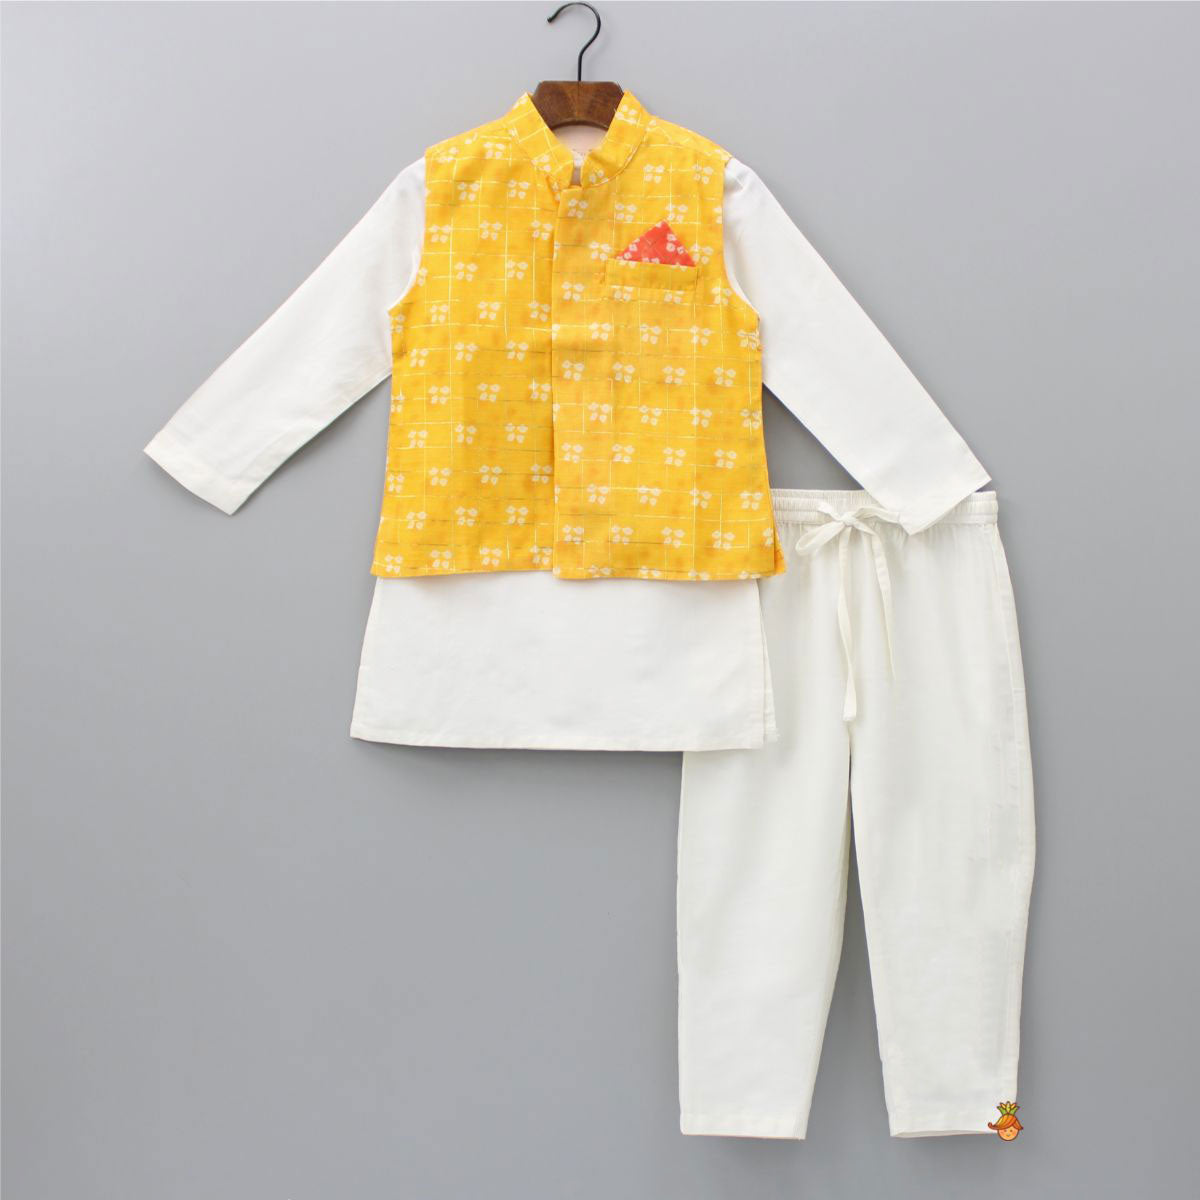 Ethnic Kurta With Contrasting Pocket Square Vibrant Yellow Jacket And Off White Pyjama